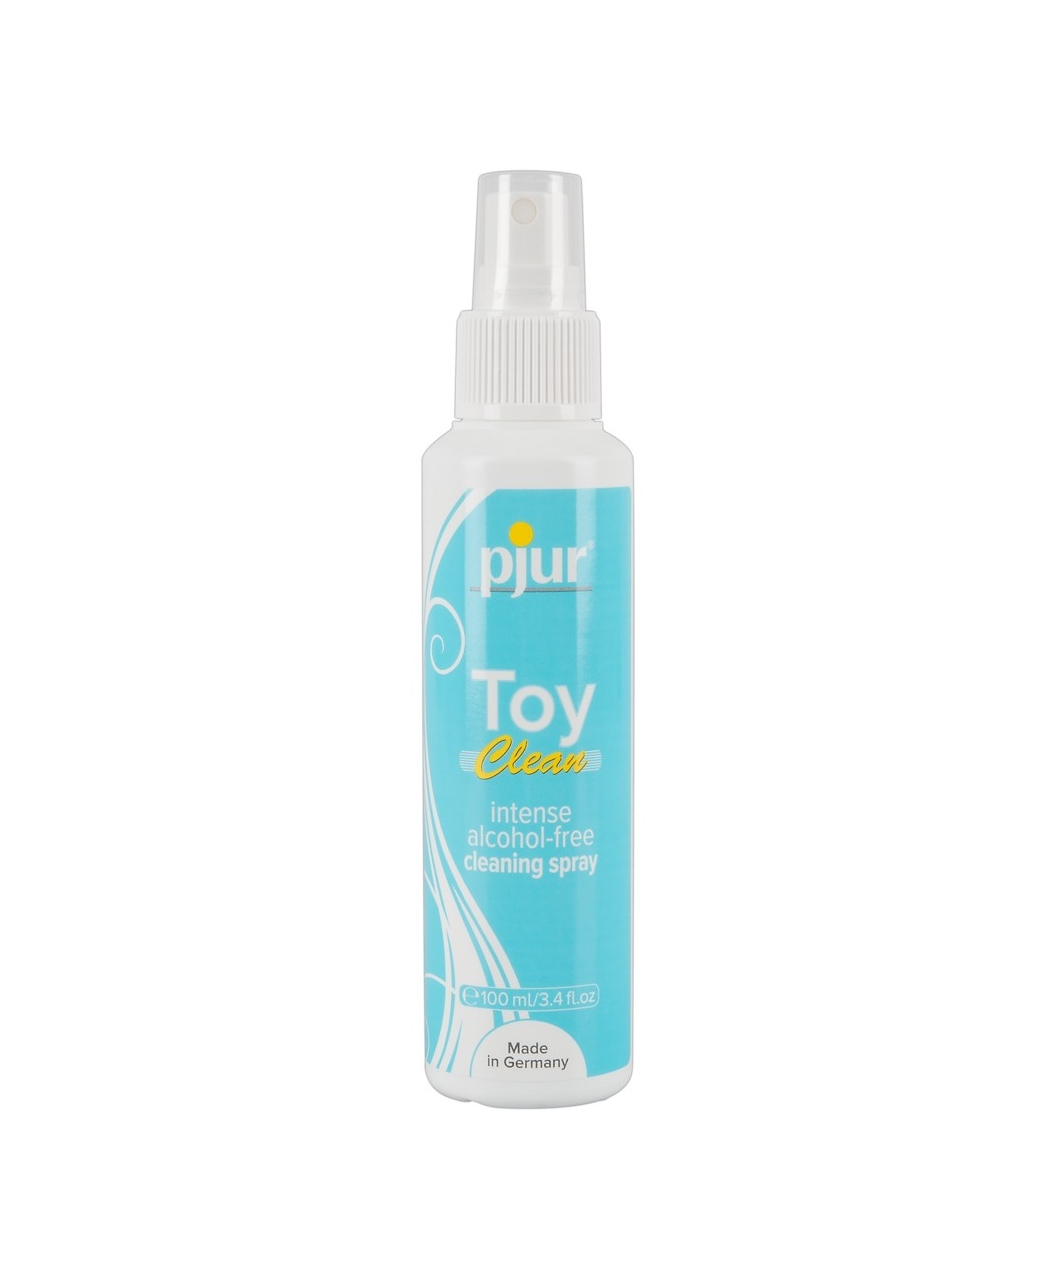 pjur Clean toy cleaning spray (100 ml)